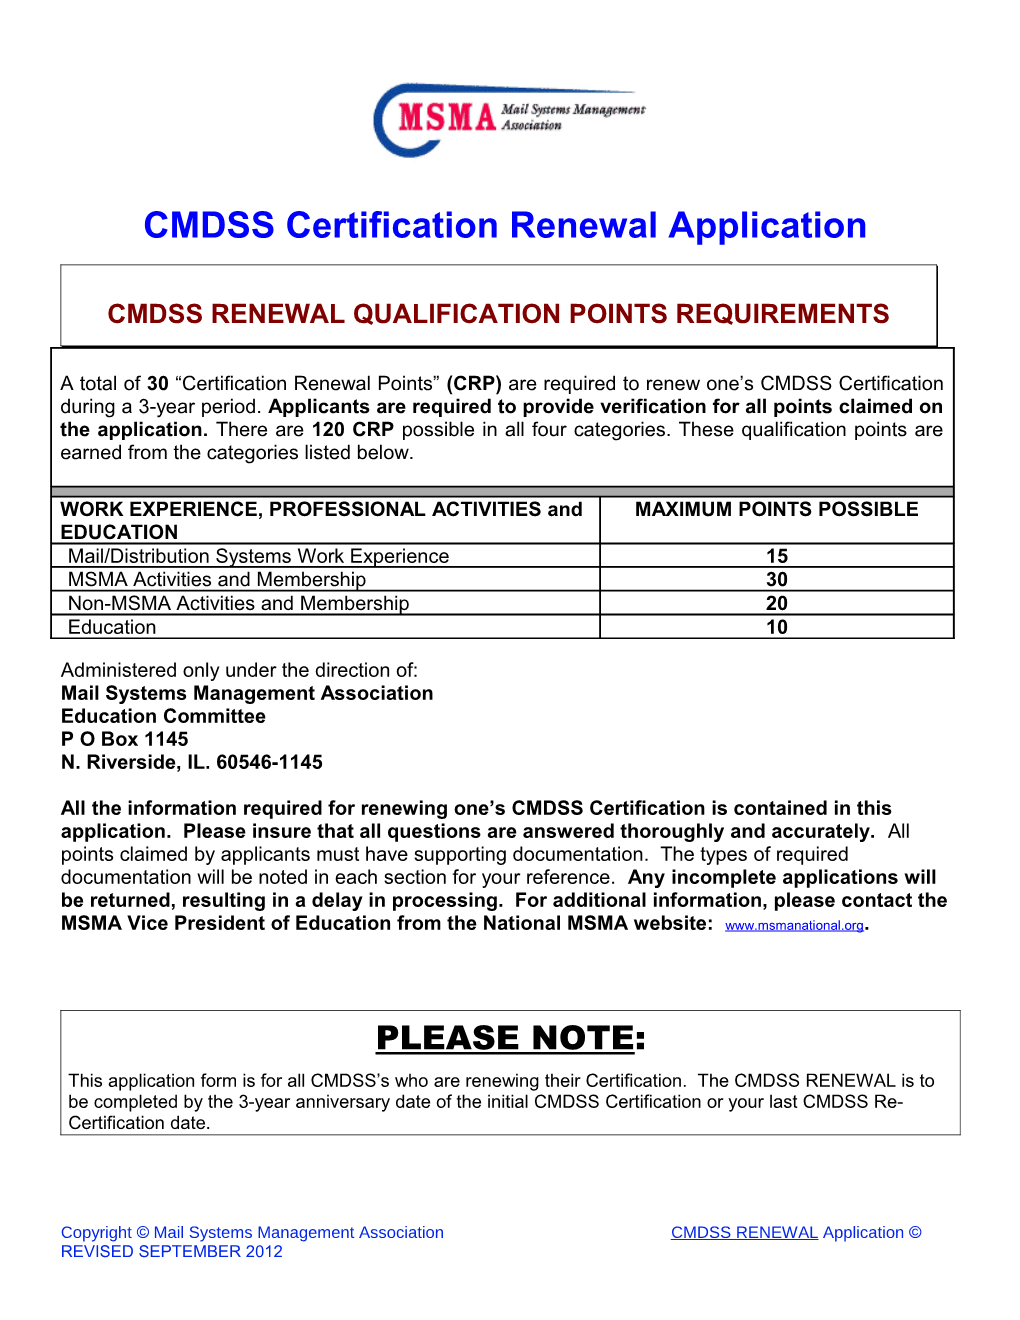 CMDSS Certification Renewal Application